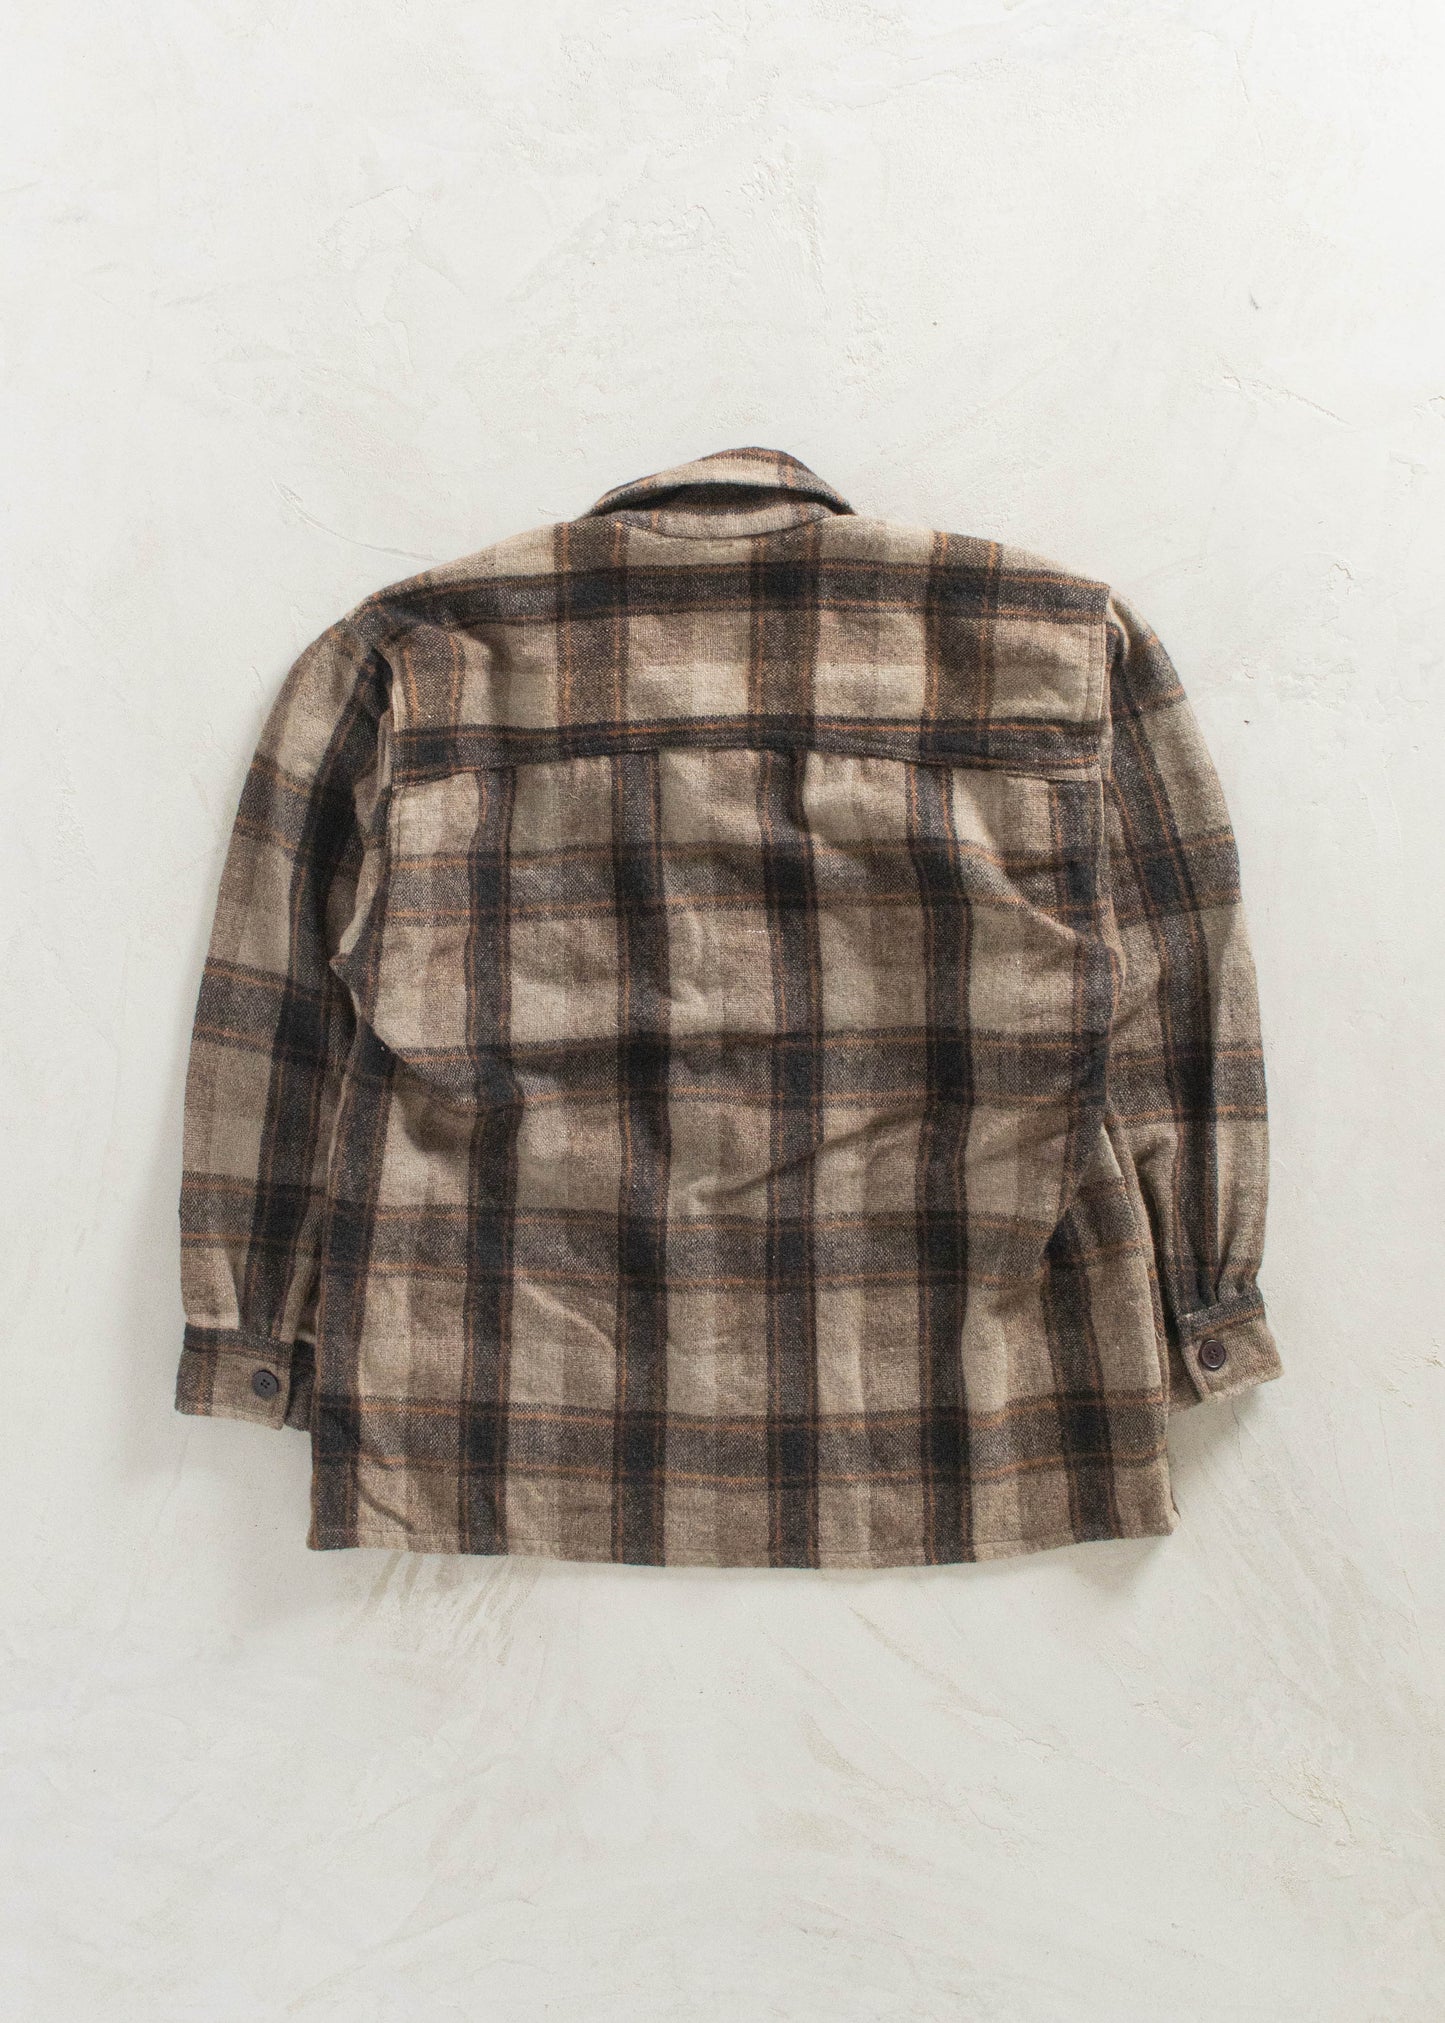 Vintage Wool Flannel Button Up Shirt Size 2XL/3XL